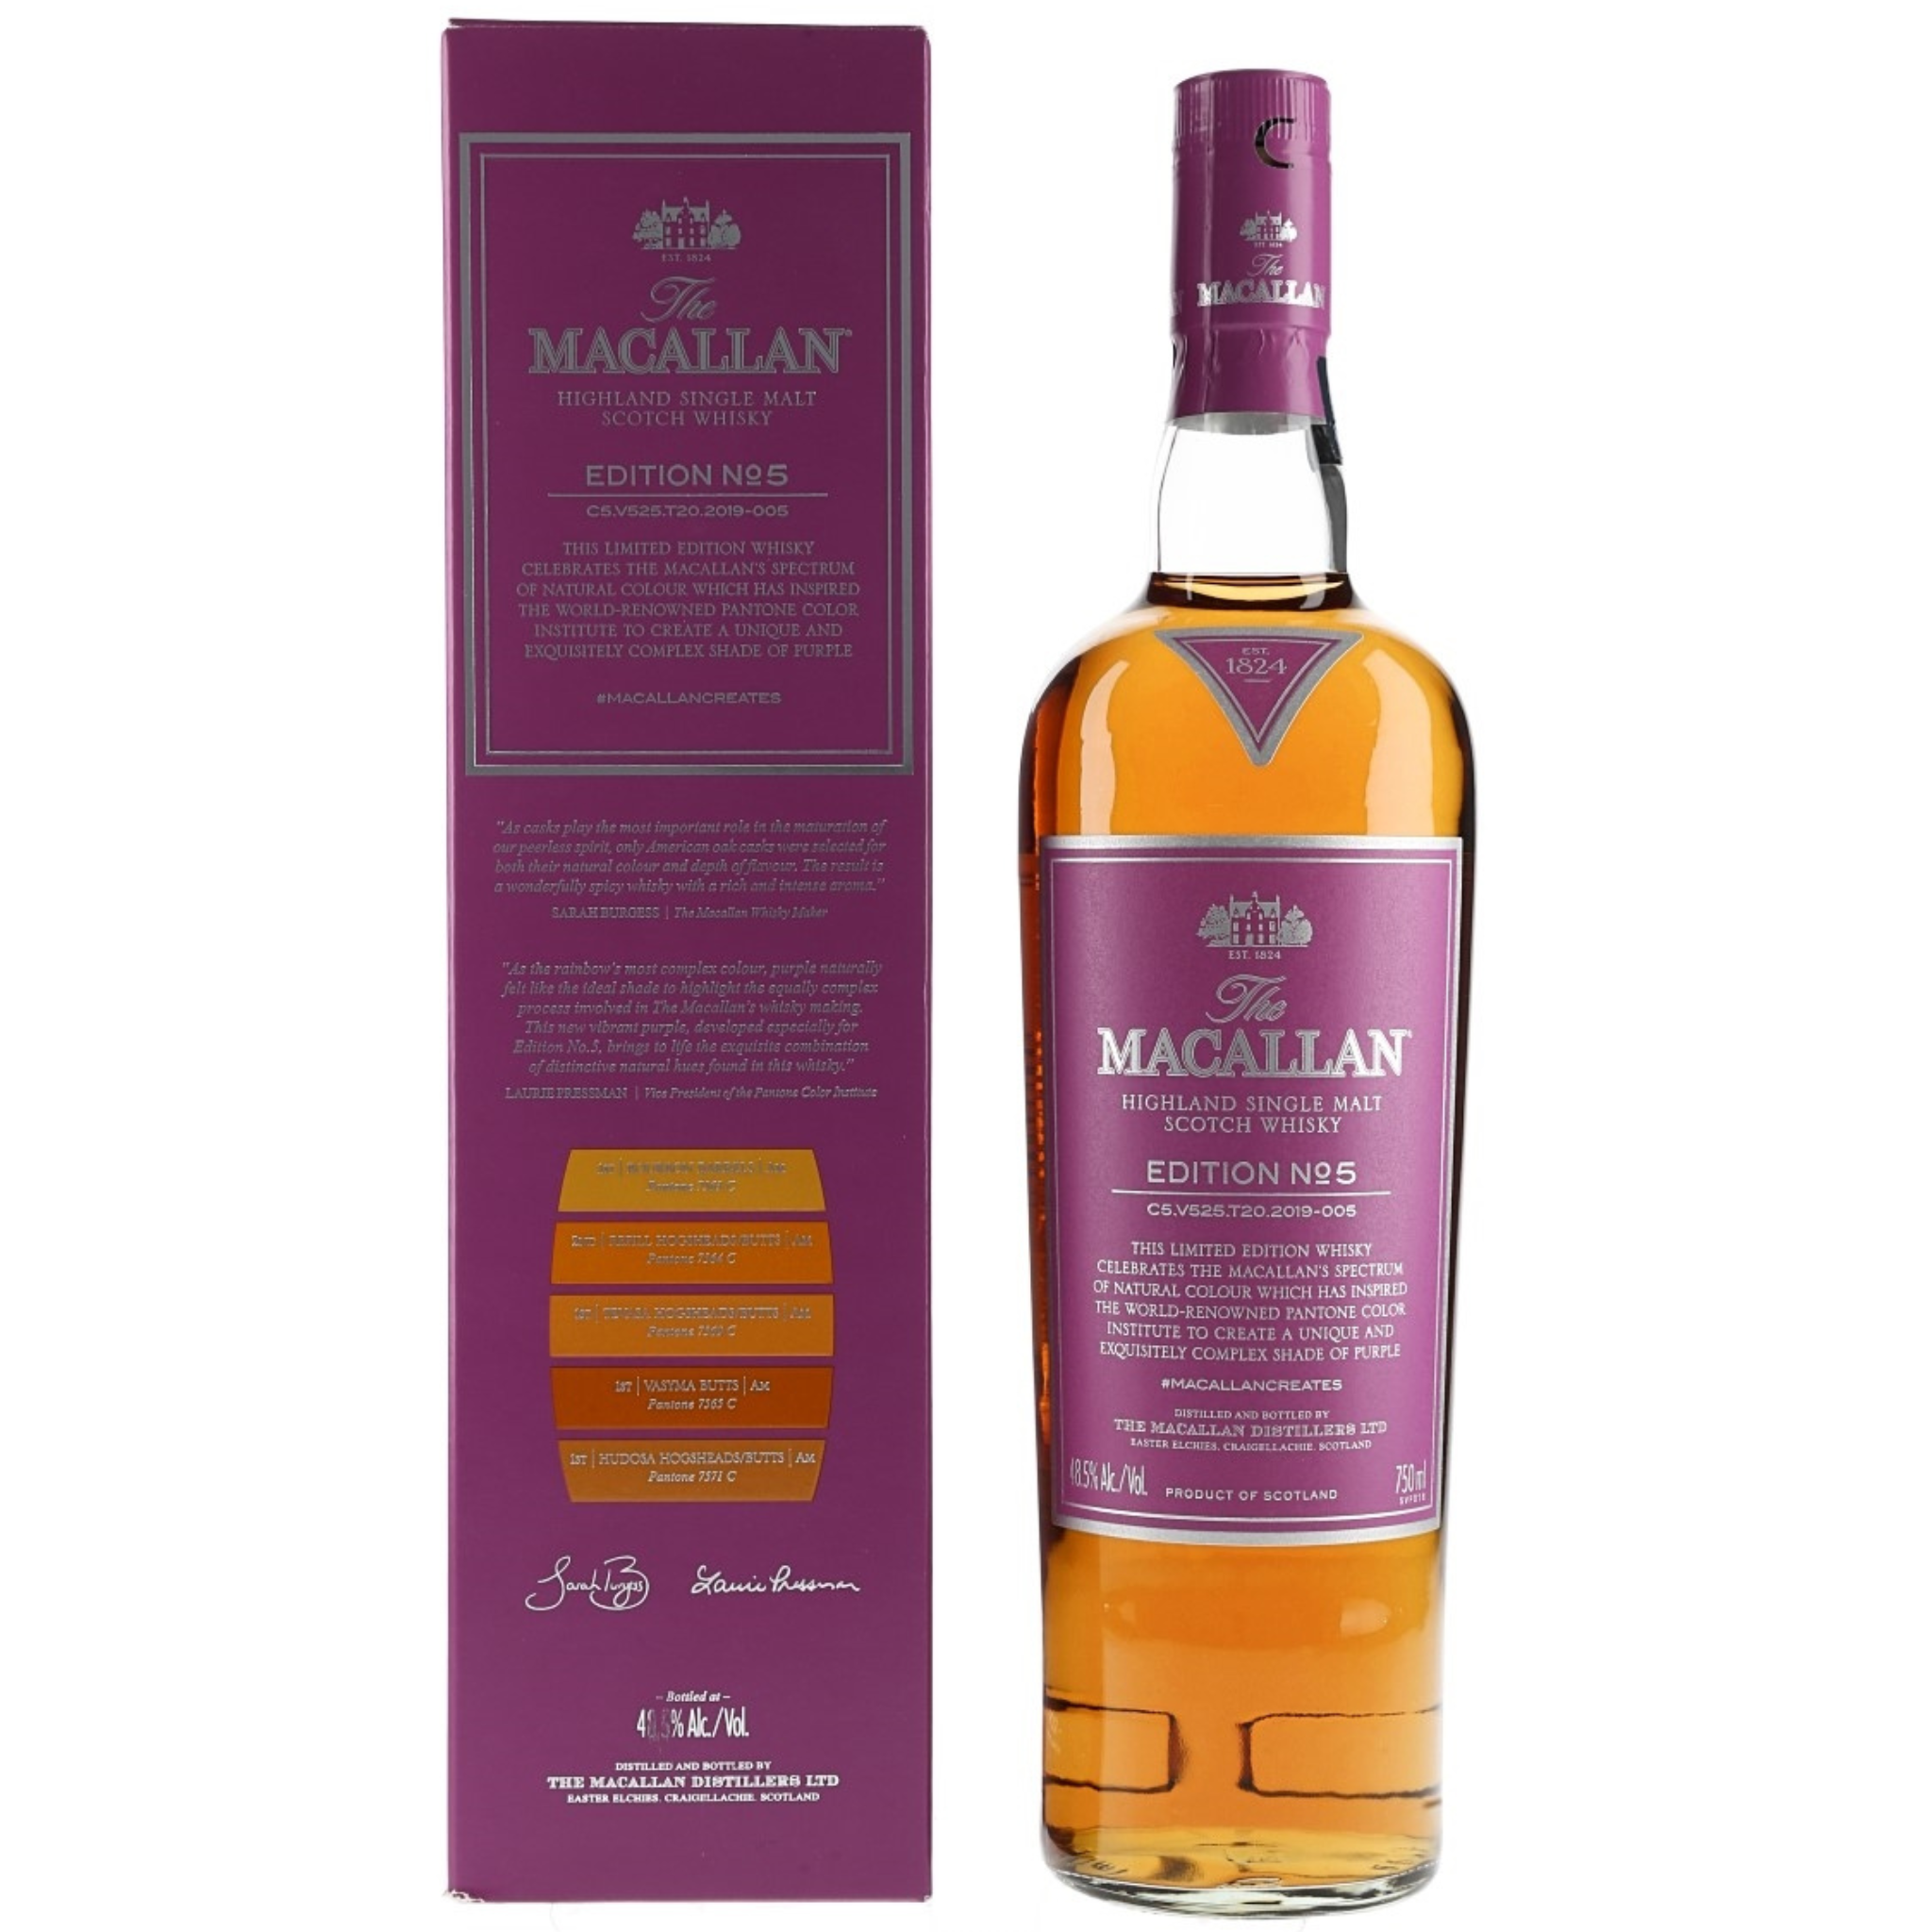 The Macallan Scotch Single Malt Edition No. 5 - 750ml